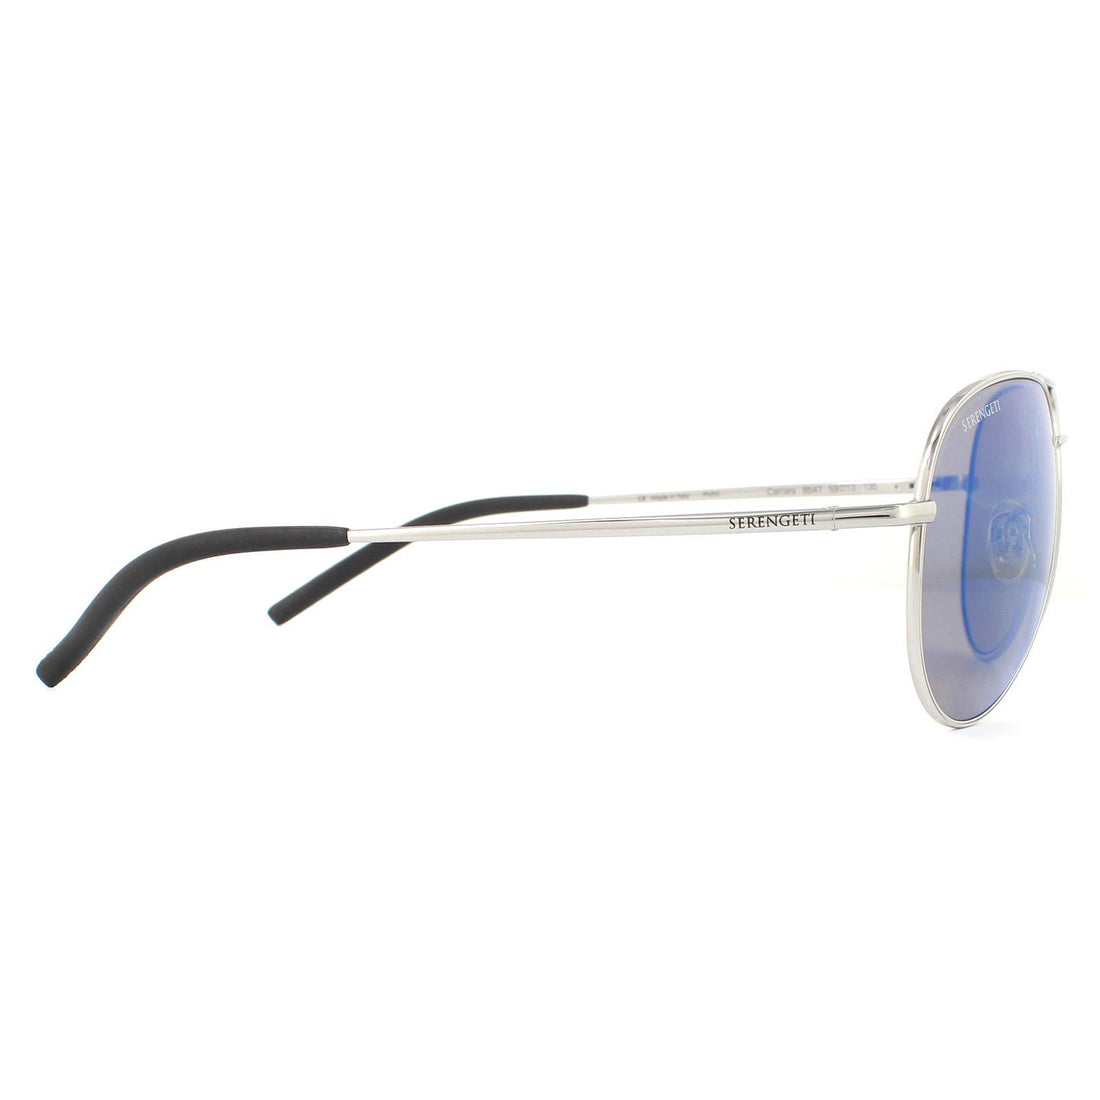 Serengeti Sunglasses Carrara 8547 Shiny Silver Mineral Polarized 555nm Blue